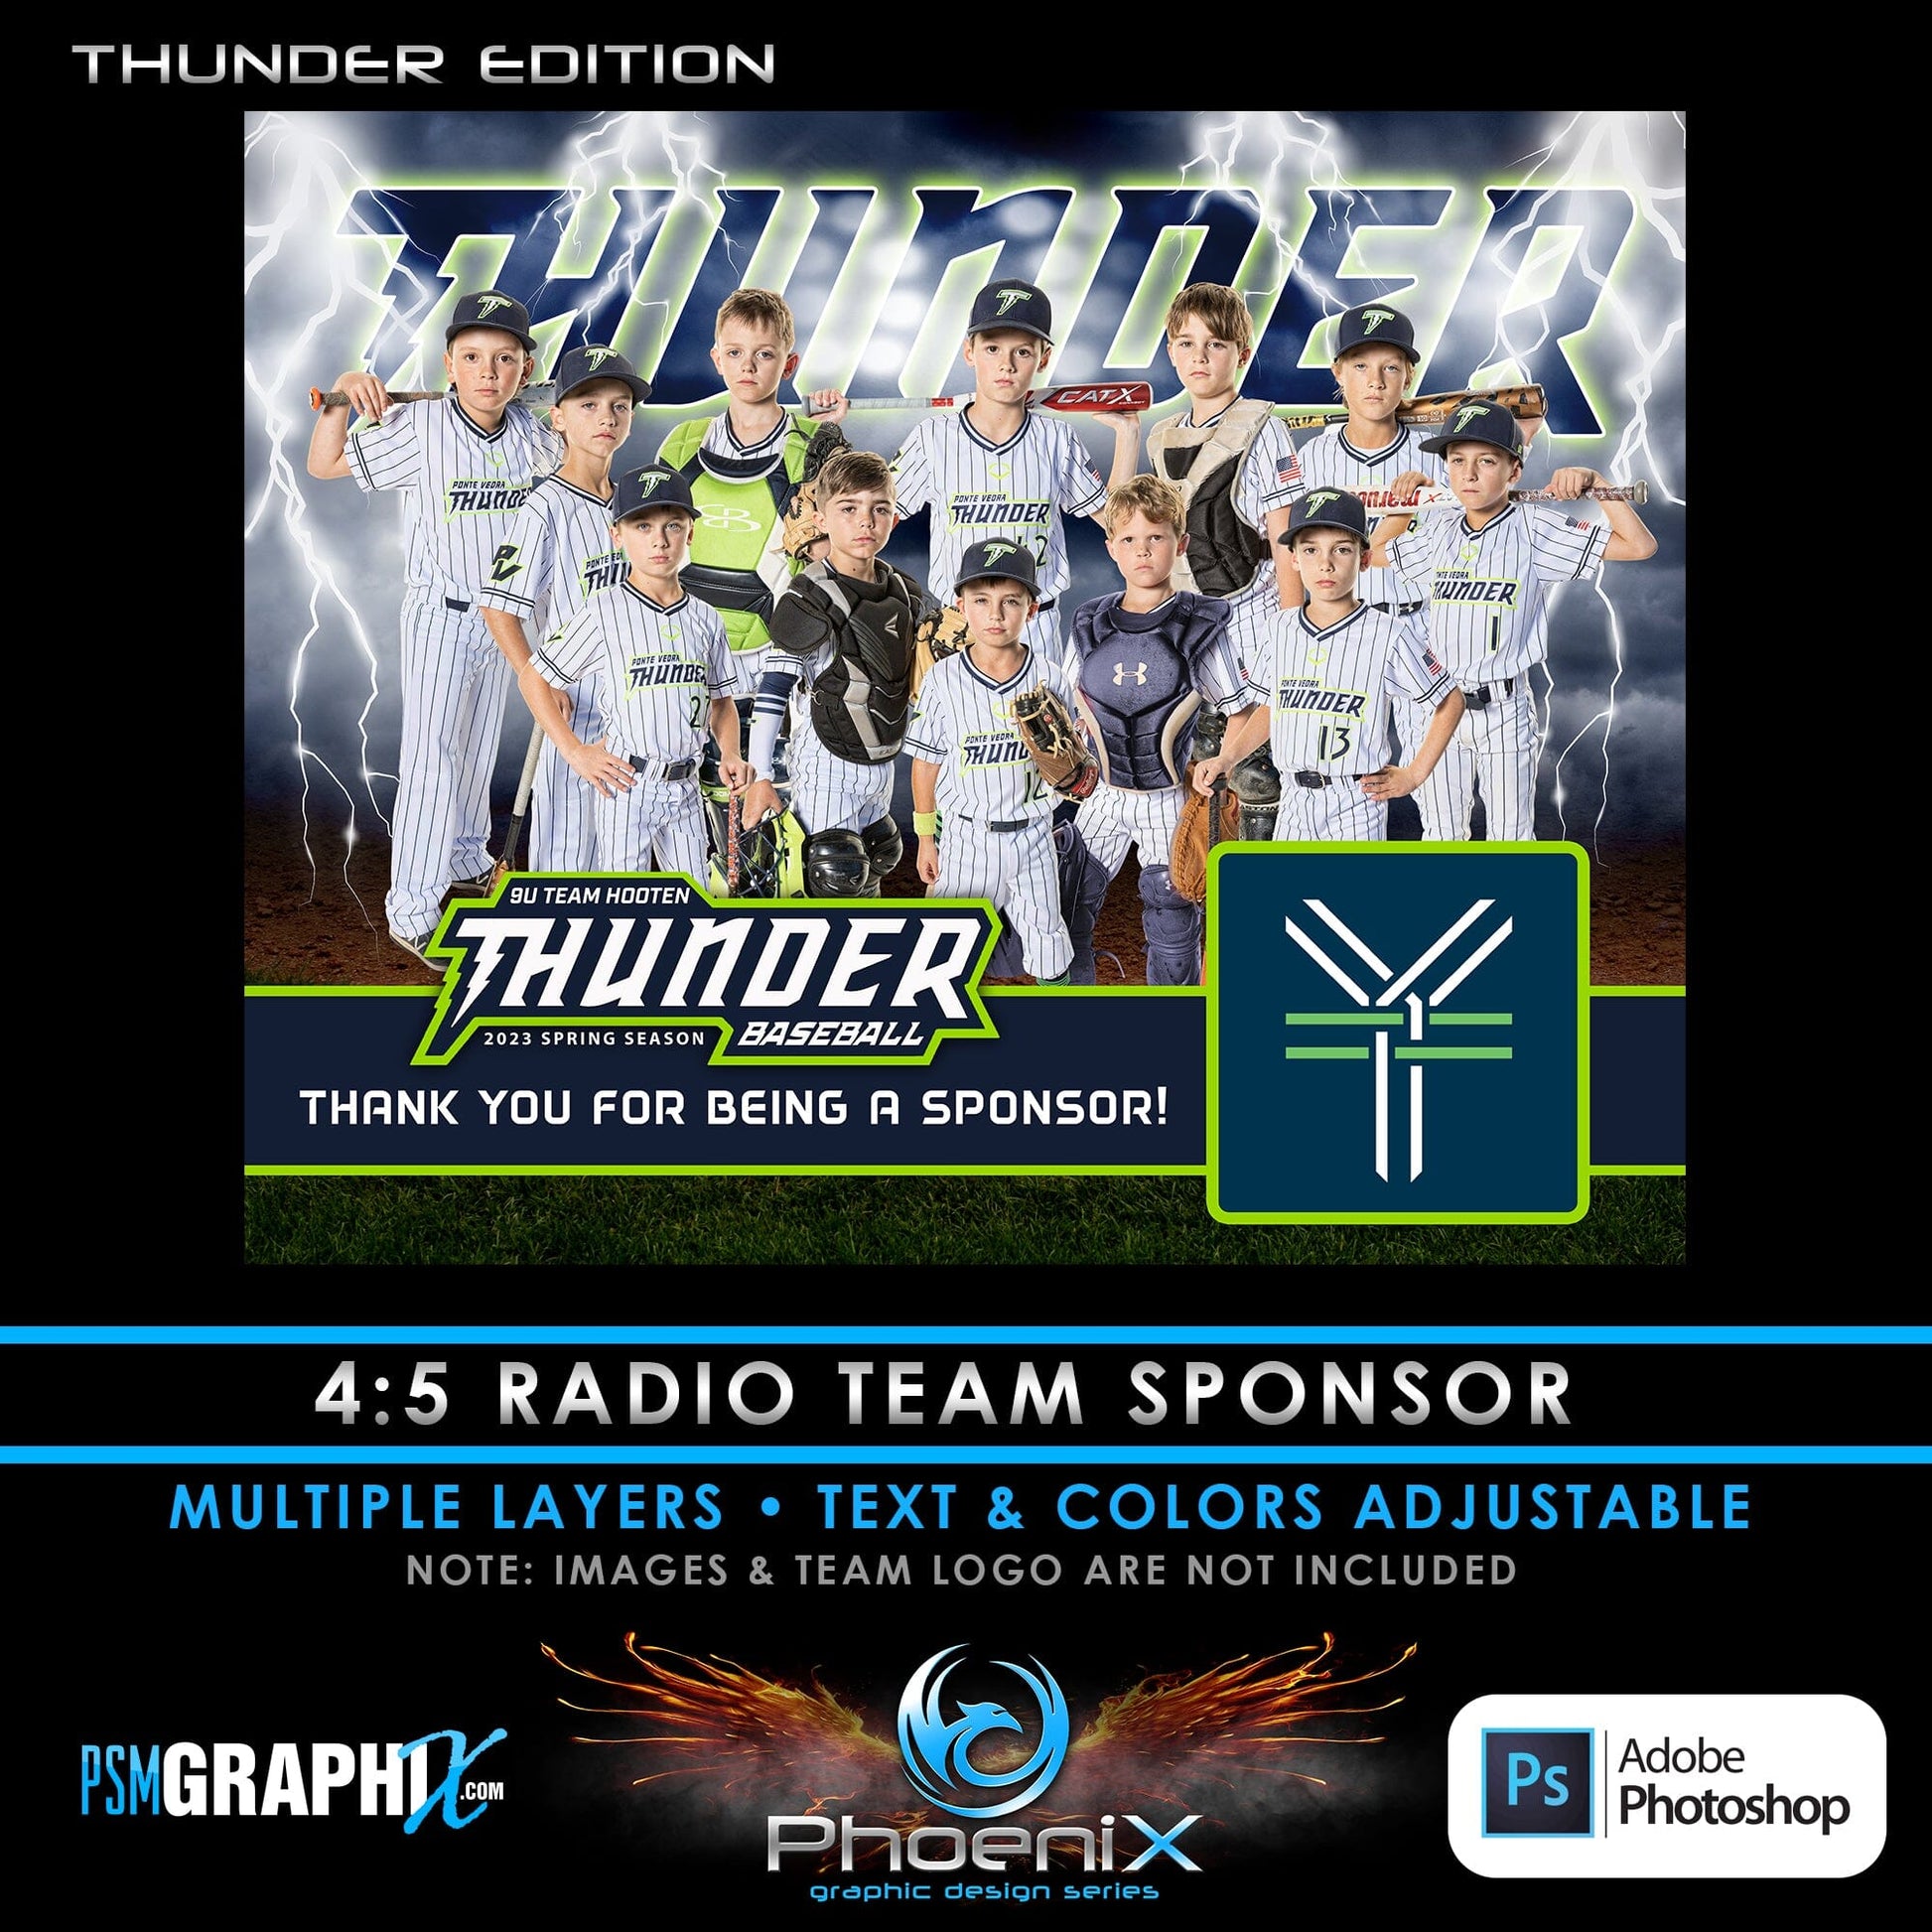 Thunder - Phoenix Series - Sponsor Plaque Template-Photoshop Template - PSMGraphix